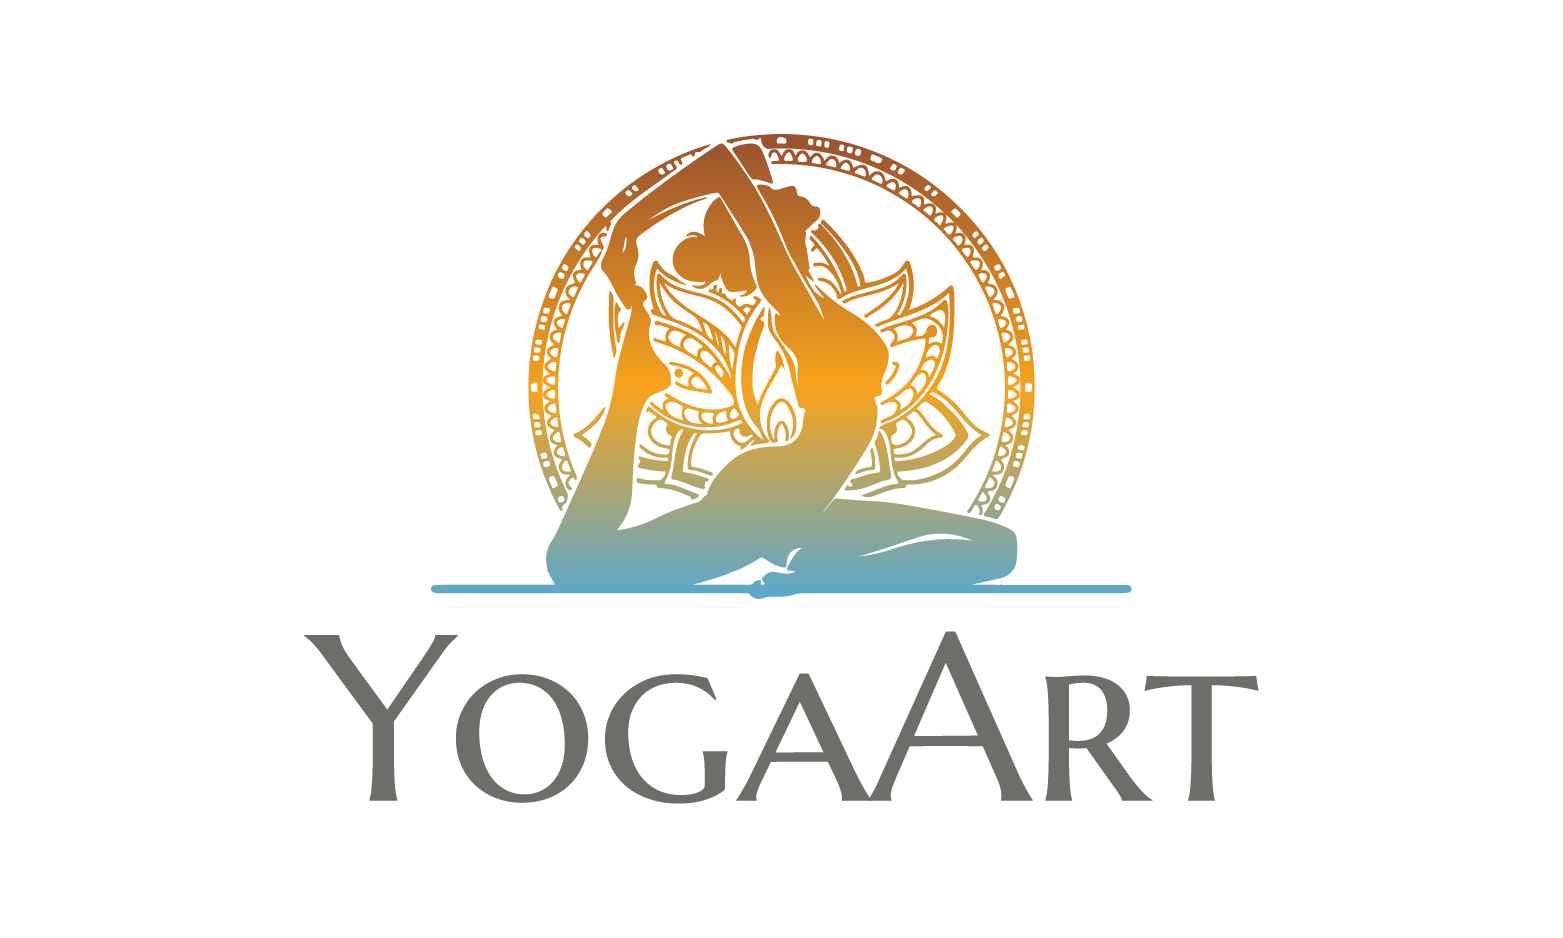 YogaArt.com - Creative brandable domain for sale